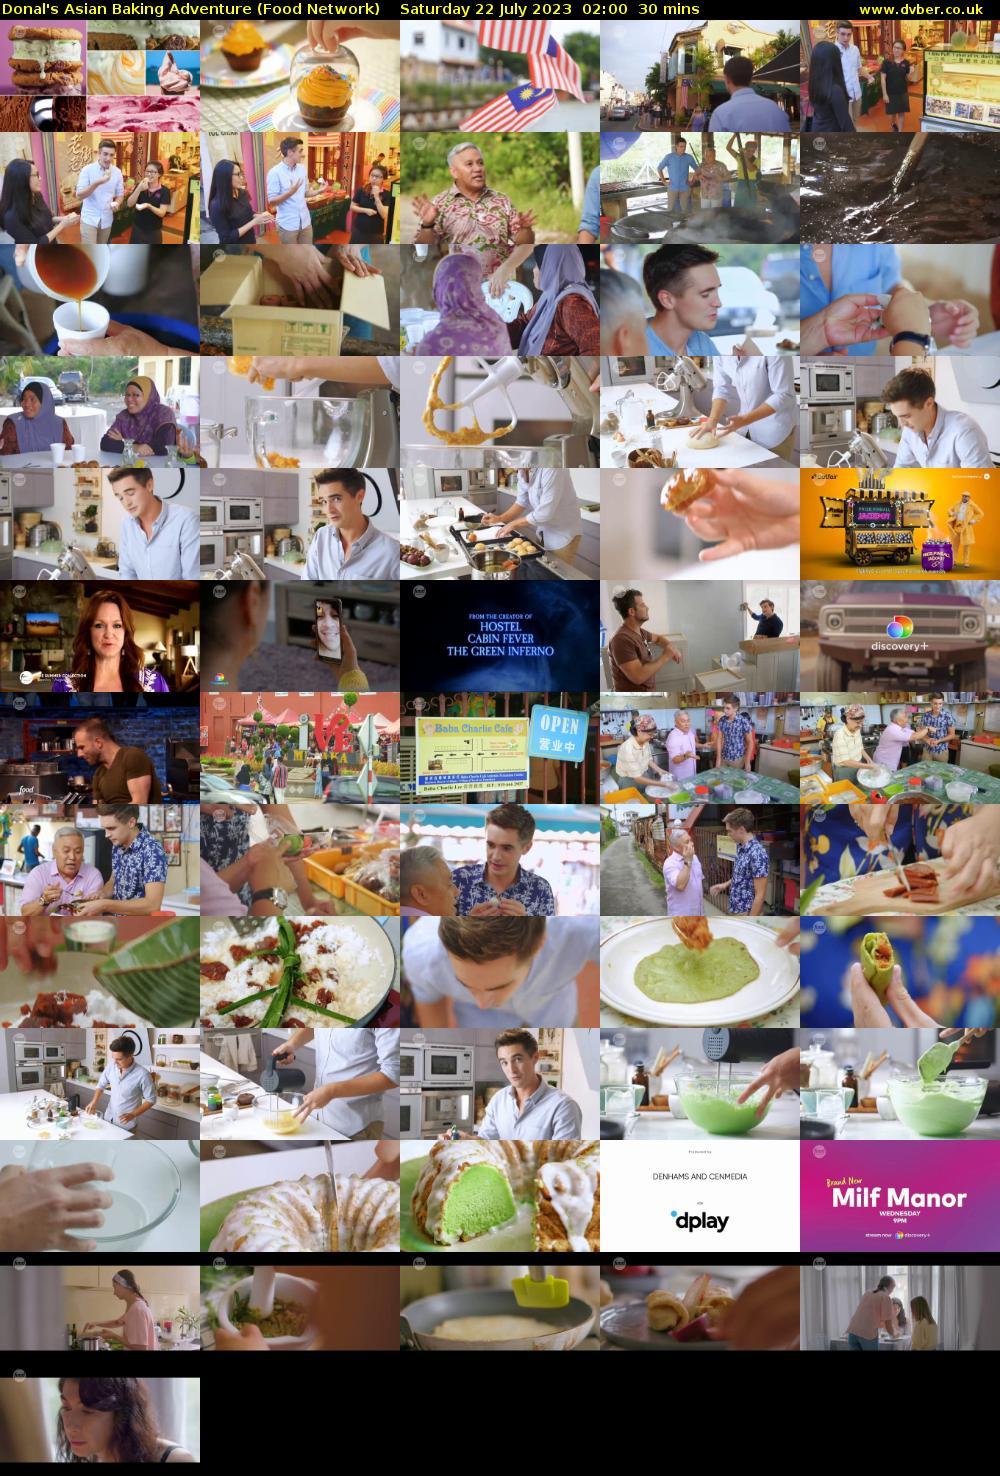 Donal's Asian Baking Adventure (Food Network) Saturday 22 July 2023 02:00 - 02:30